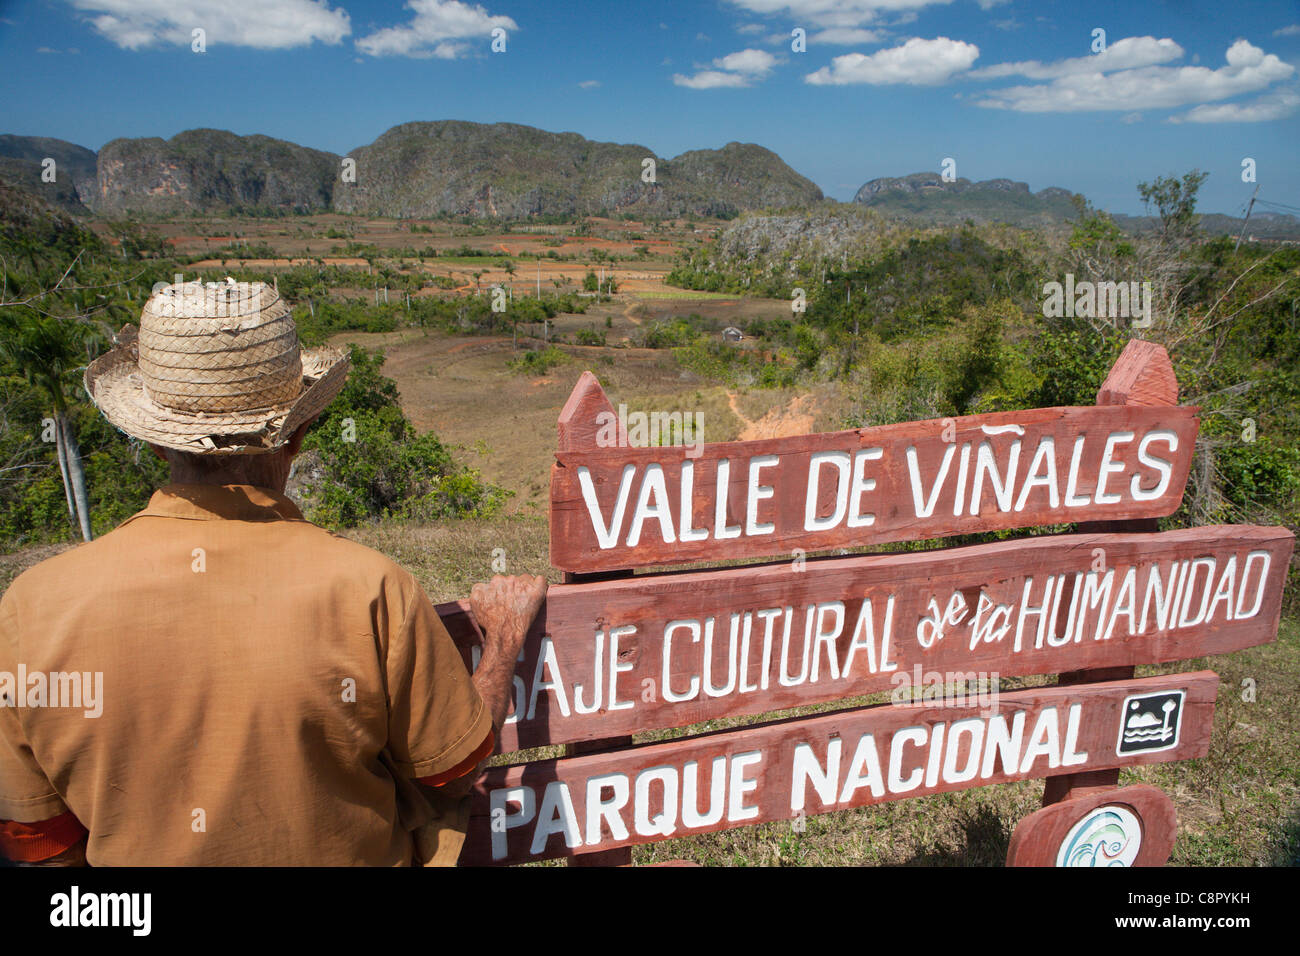 PINAR DEL RIO: Vinales Valley SIGNPOST E PAESAGGIO Foto Stock